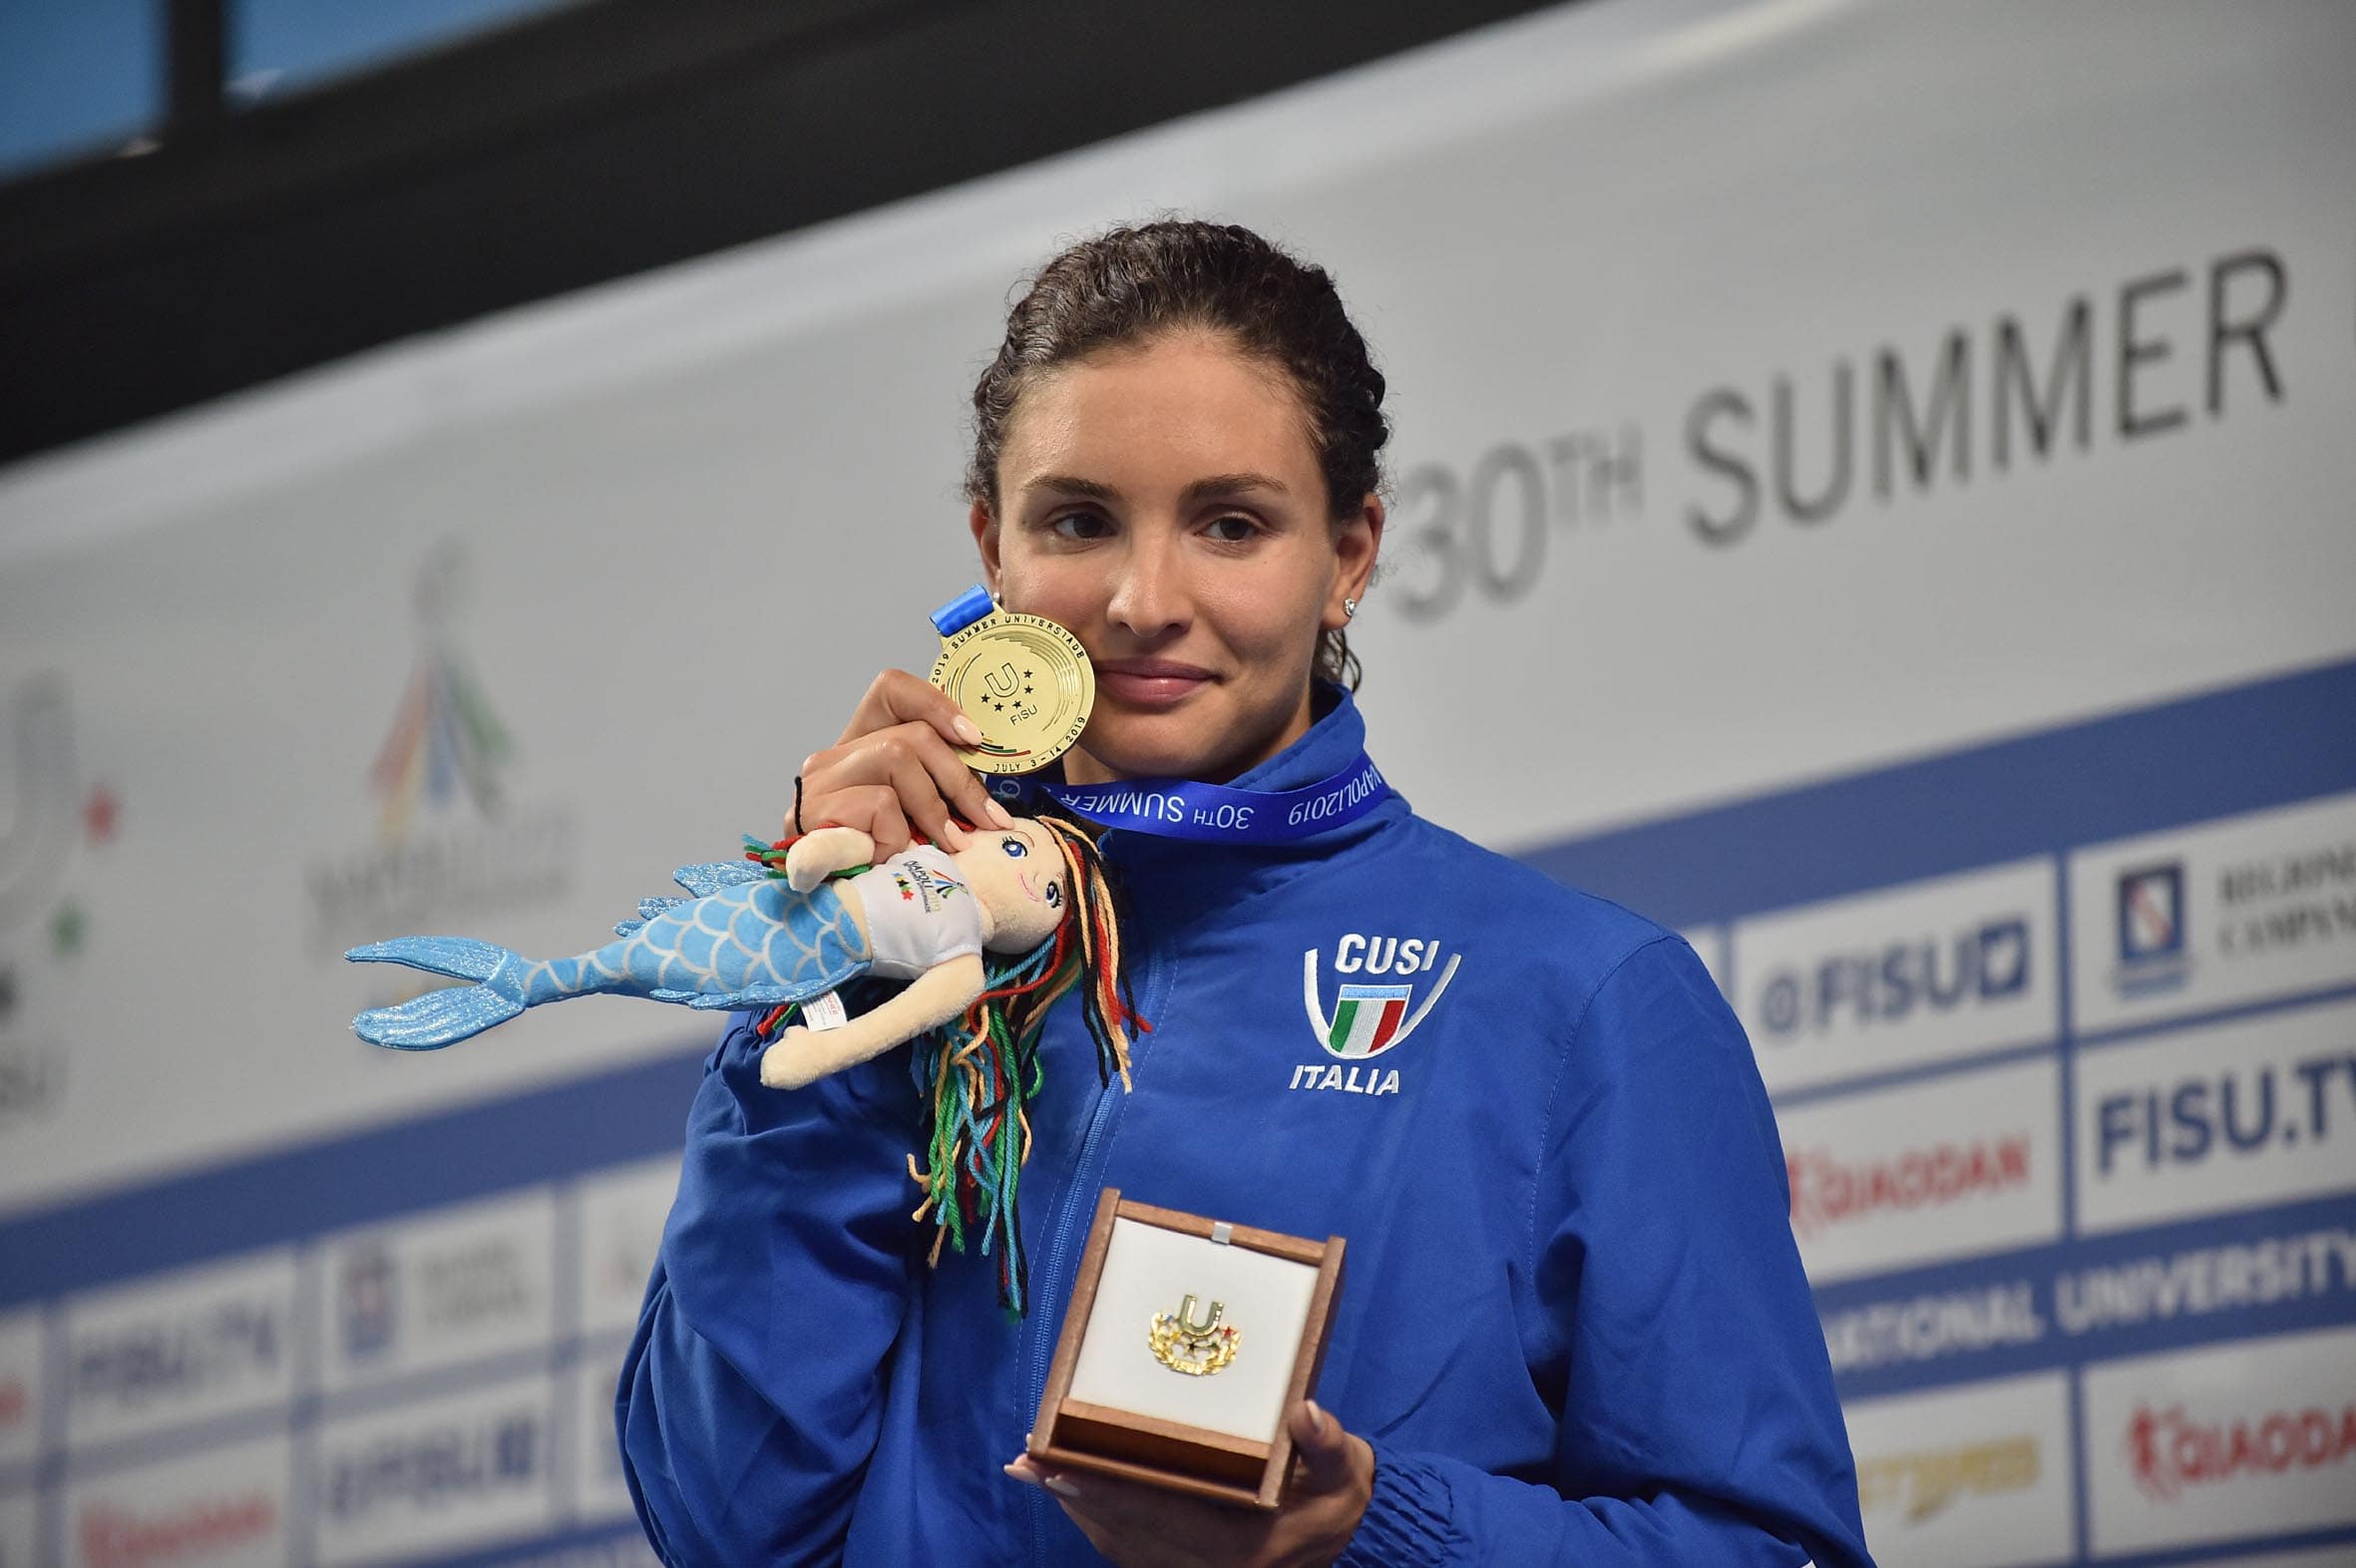 Universiade, da Daisy Osakue a Silvia Scalia: ecco l’italian girl power a Napoli 2019